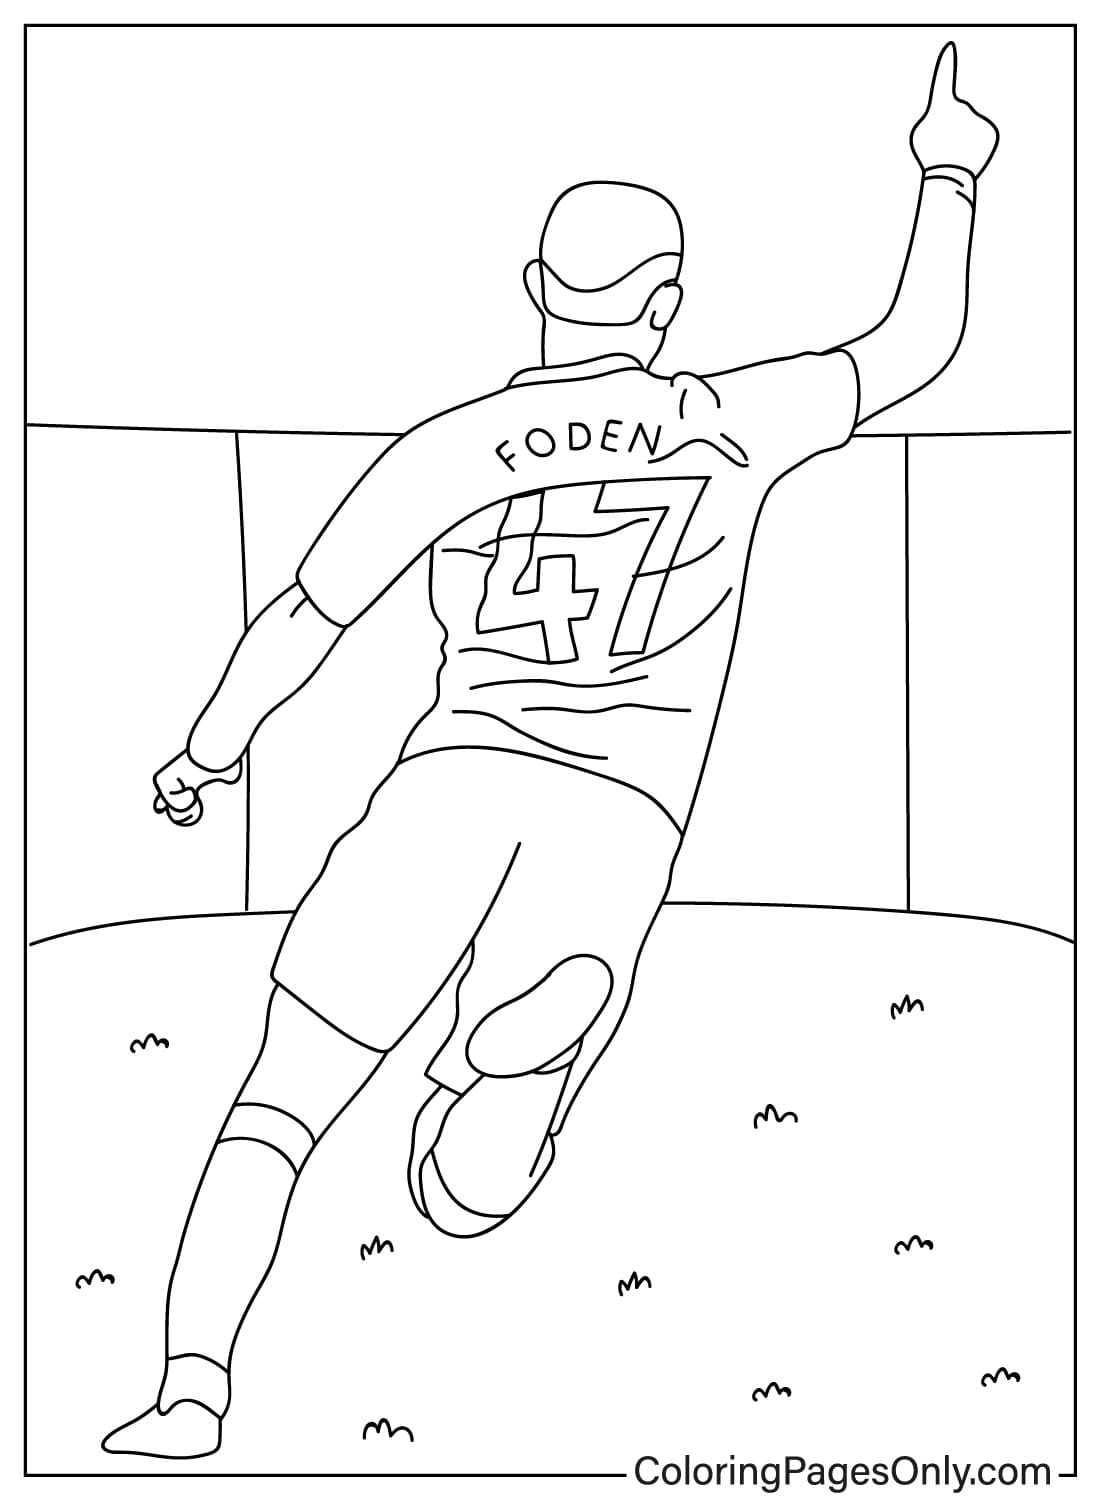 Phil Foden Goal Celebration Coloring ...